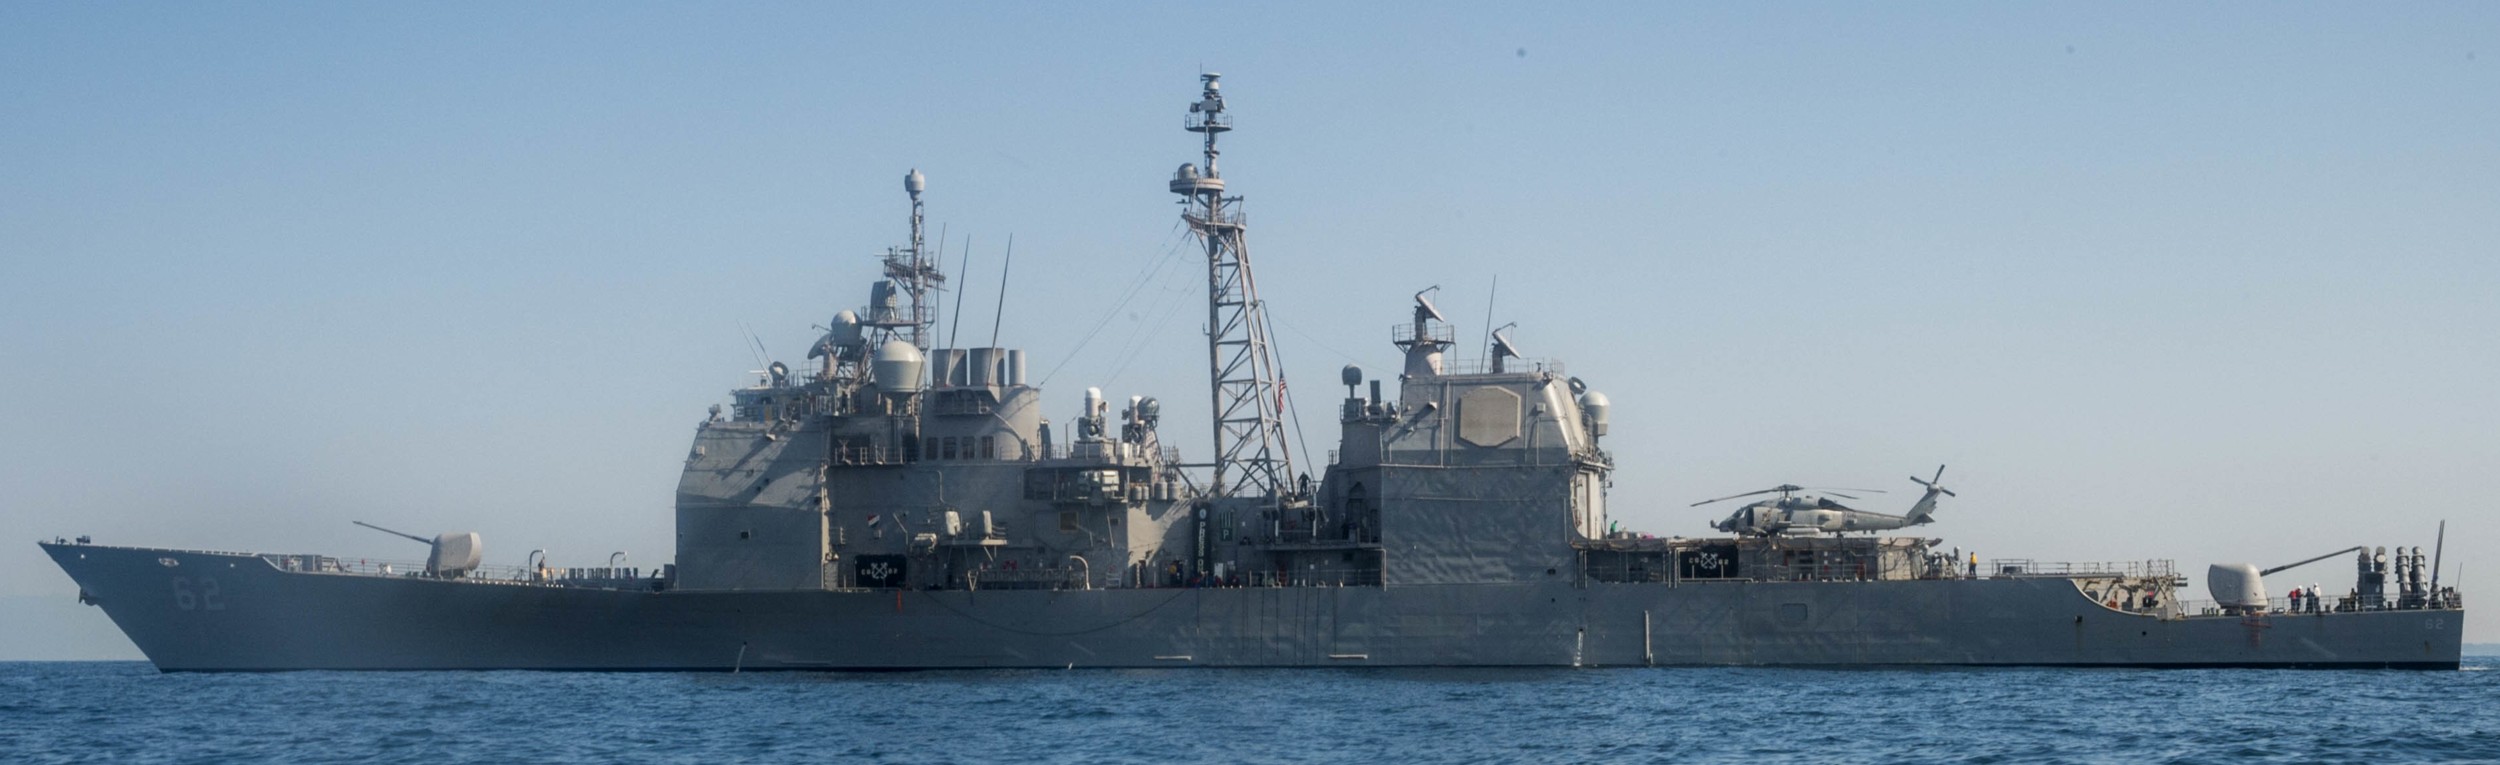 cg-62 uss chancellorsville ticonderoga class guided missile cruiser aegis us navy 77